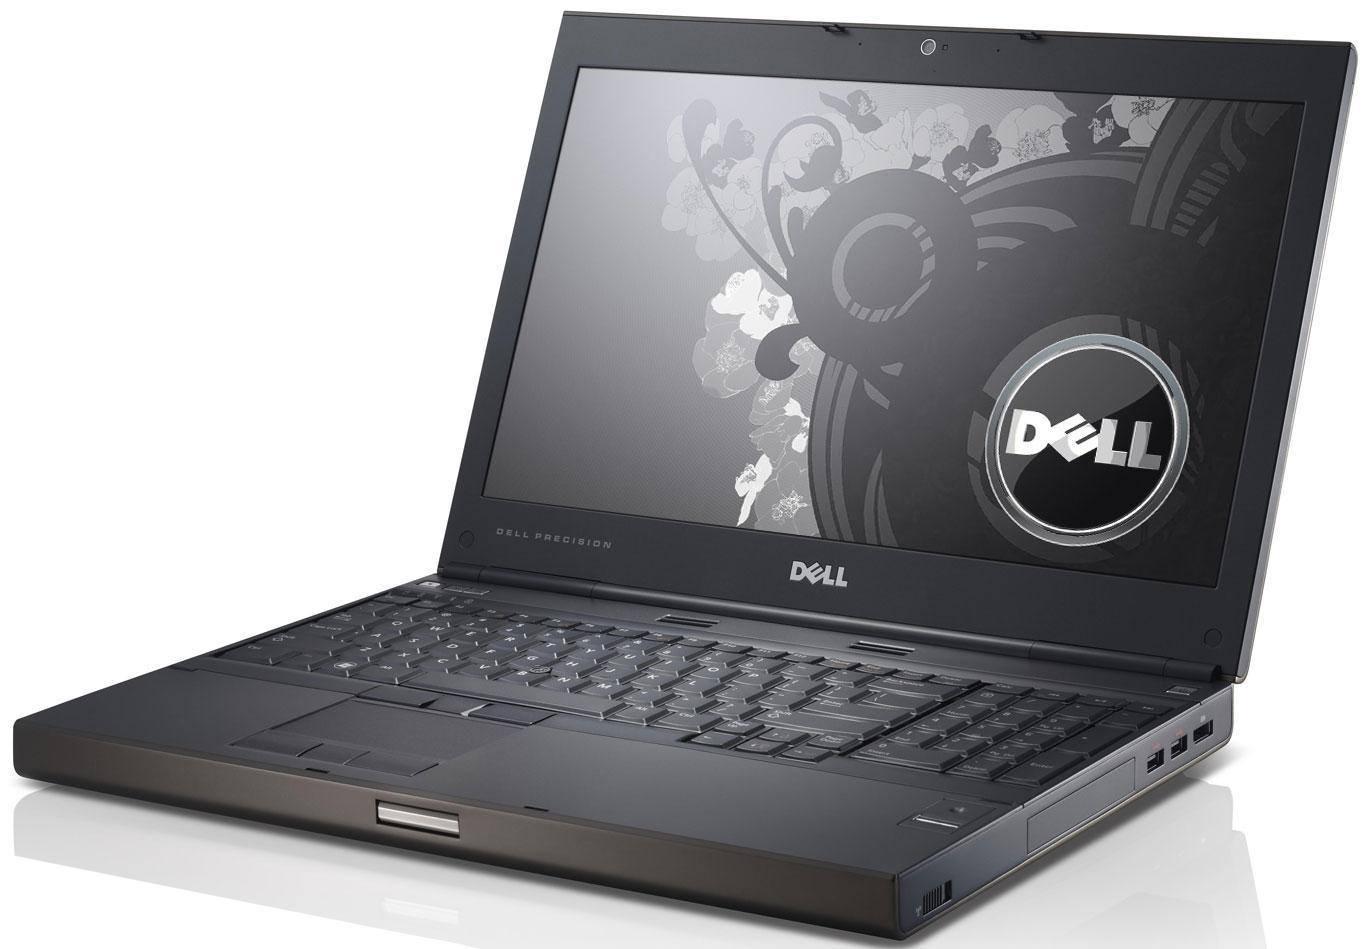 Dell Precision M4800 Core i7-4800MQ Ram 8Gb Ssd 128Gb + Hdd 500Gb